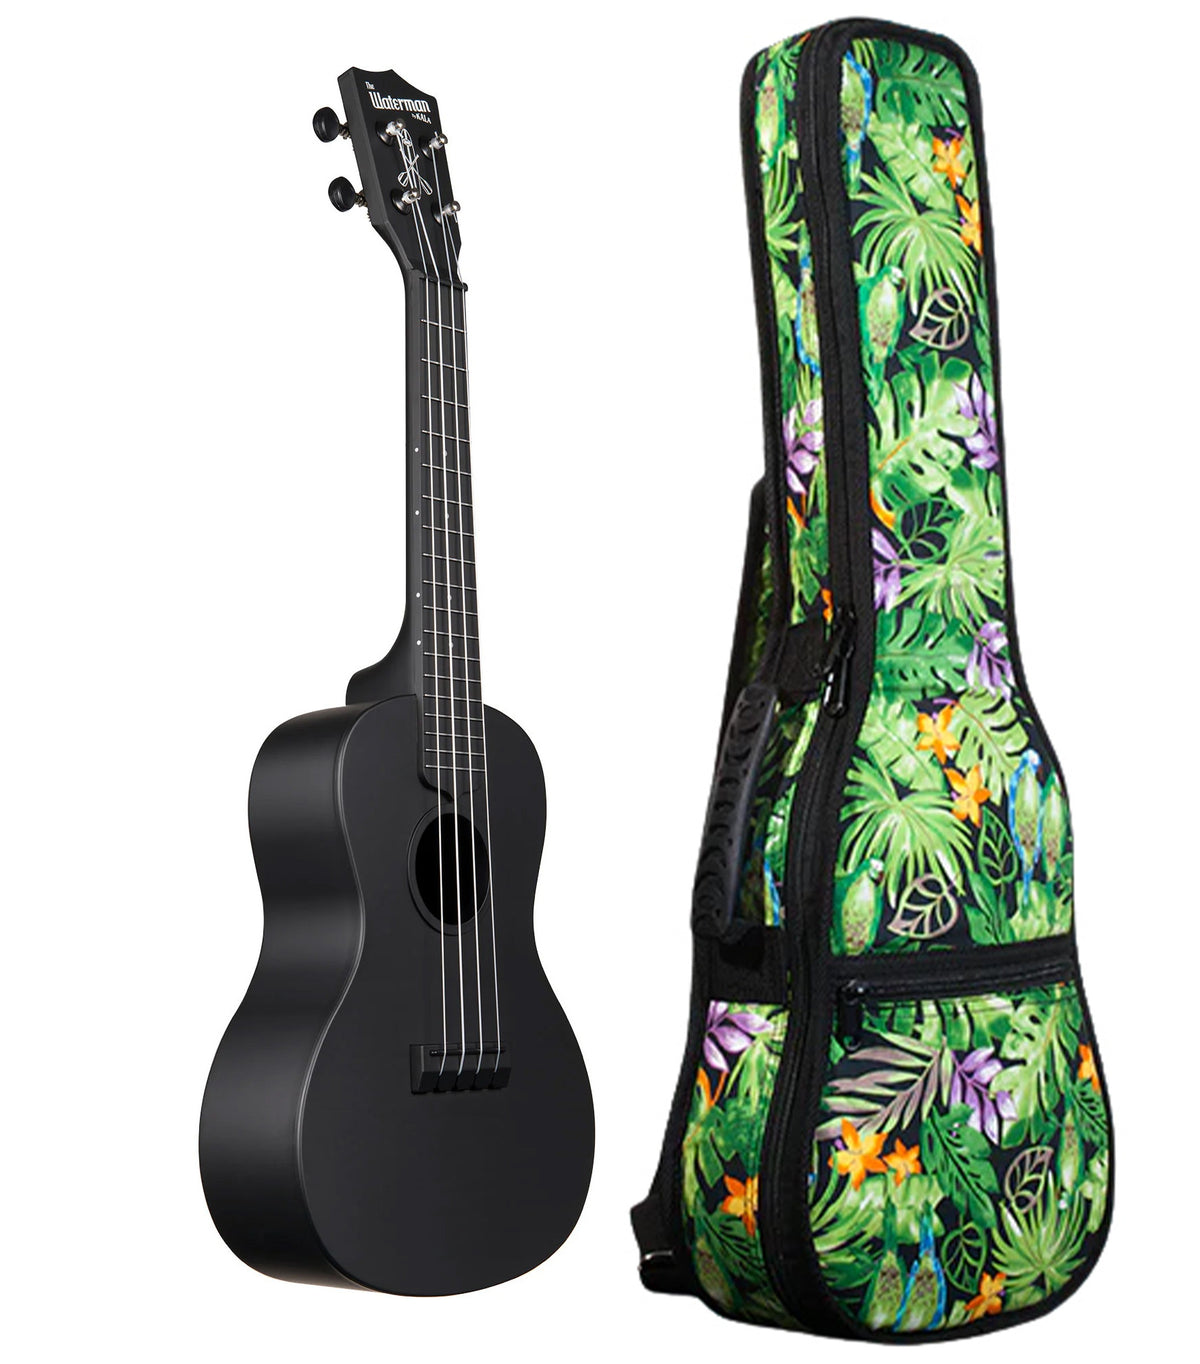 KA-CWB-BK Black Concert Waterman Includes Gigbag Floral Print, Padded with Backpack Straps